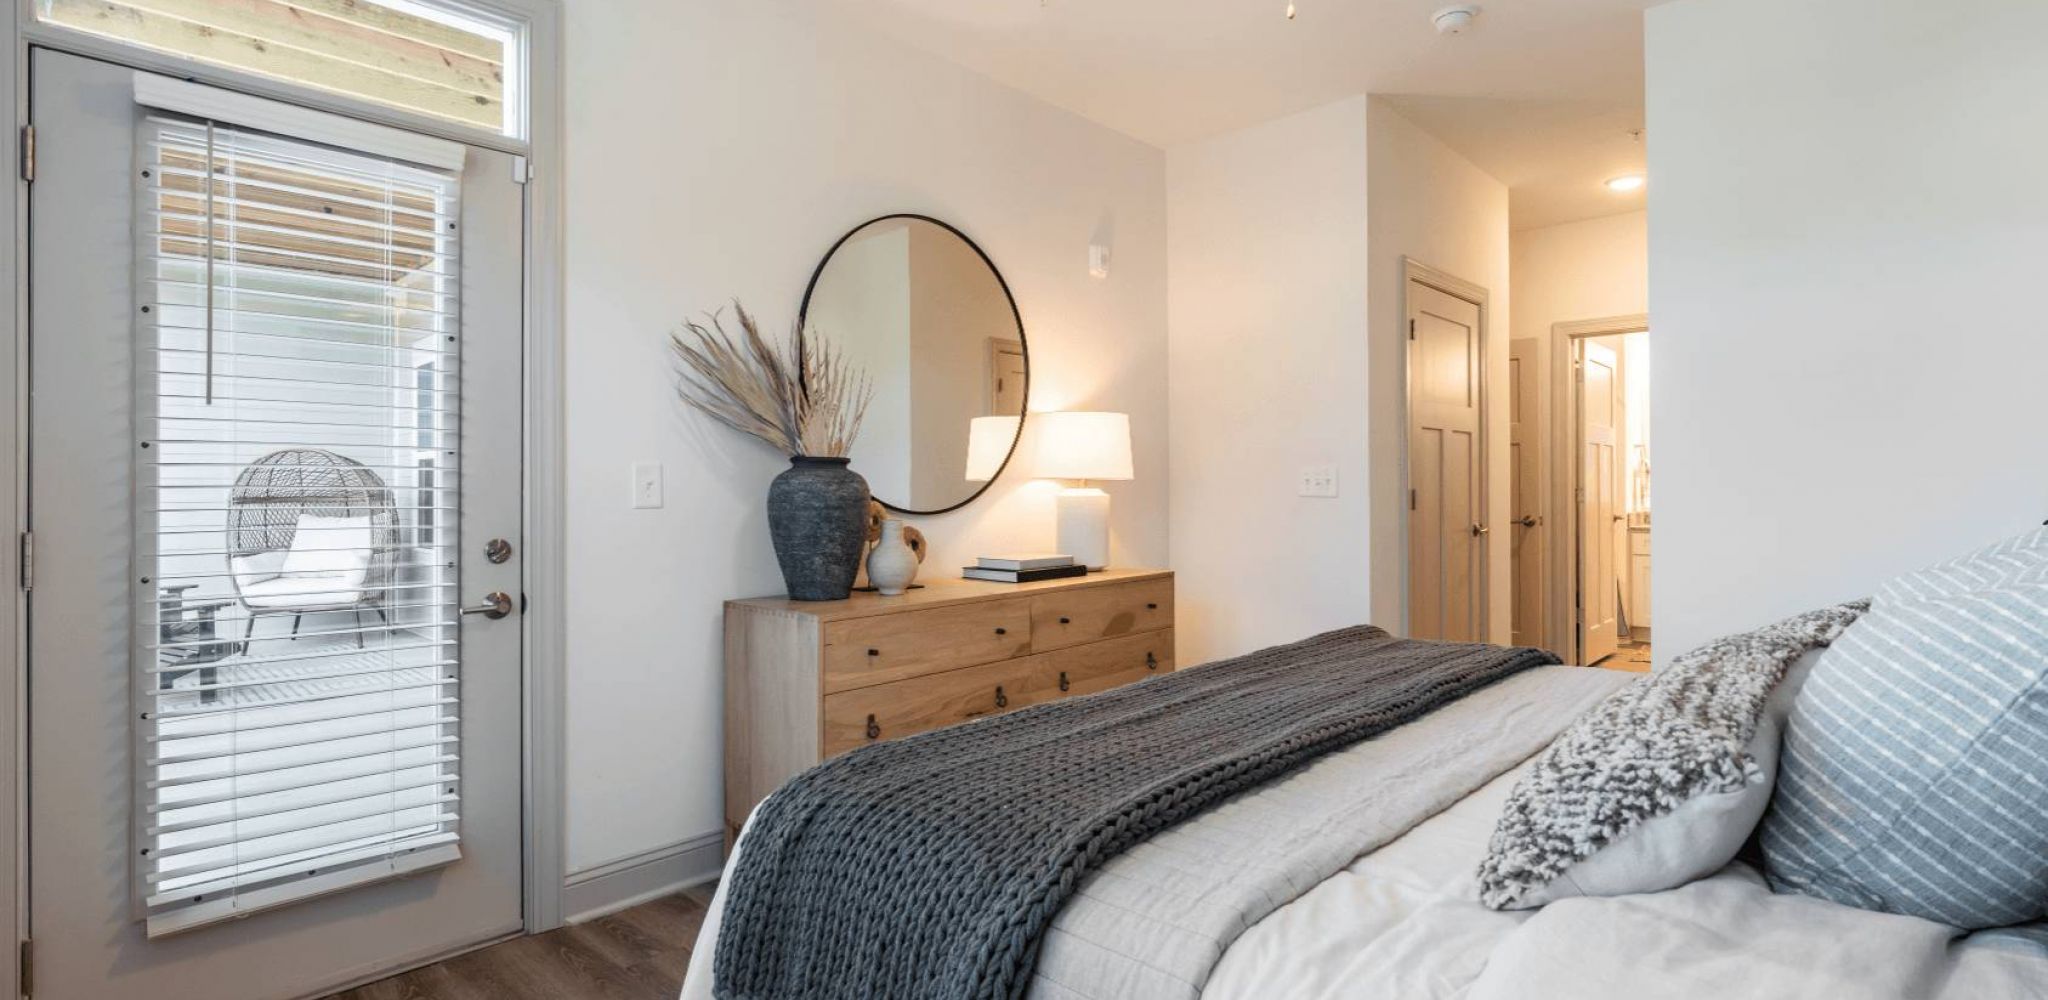 Hawthorne Waterway spacious apartment bedroom with hardwood floors and large windows